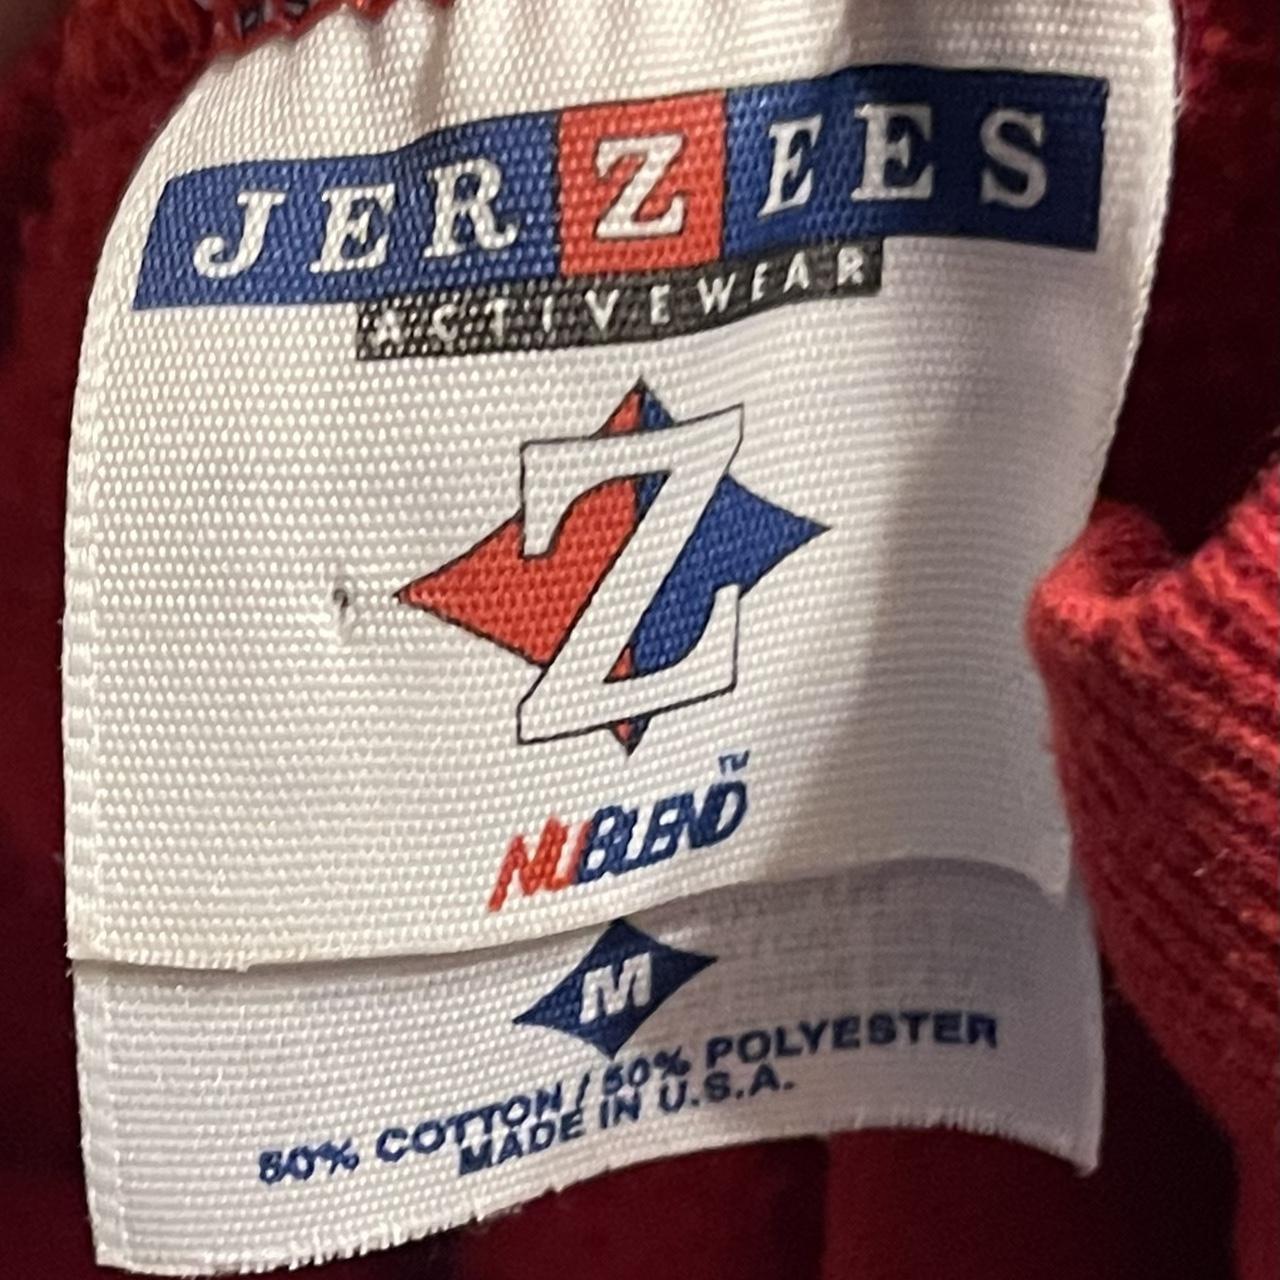 Vintage Louisville Cardinals sweater No original tag - Depop